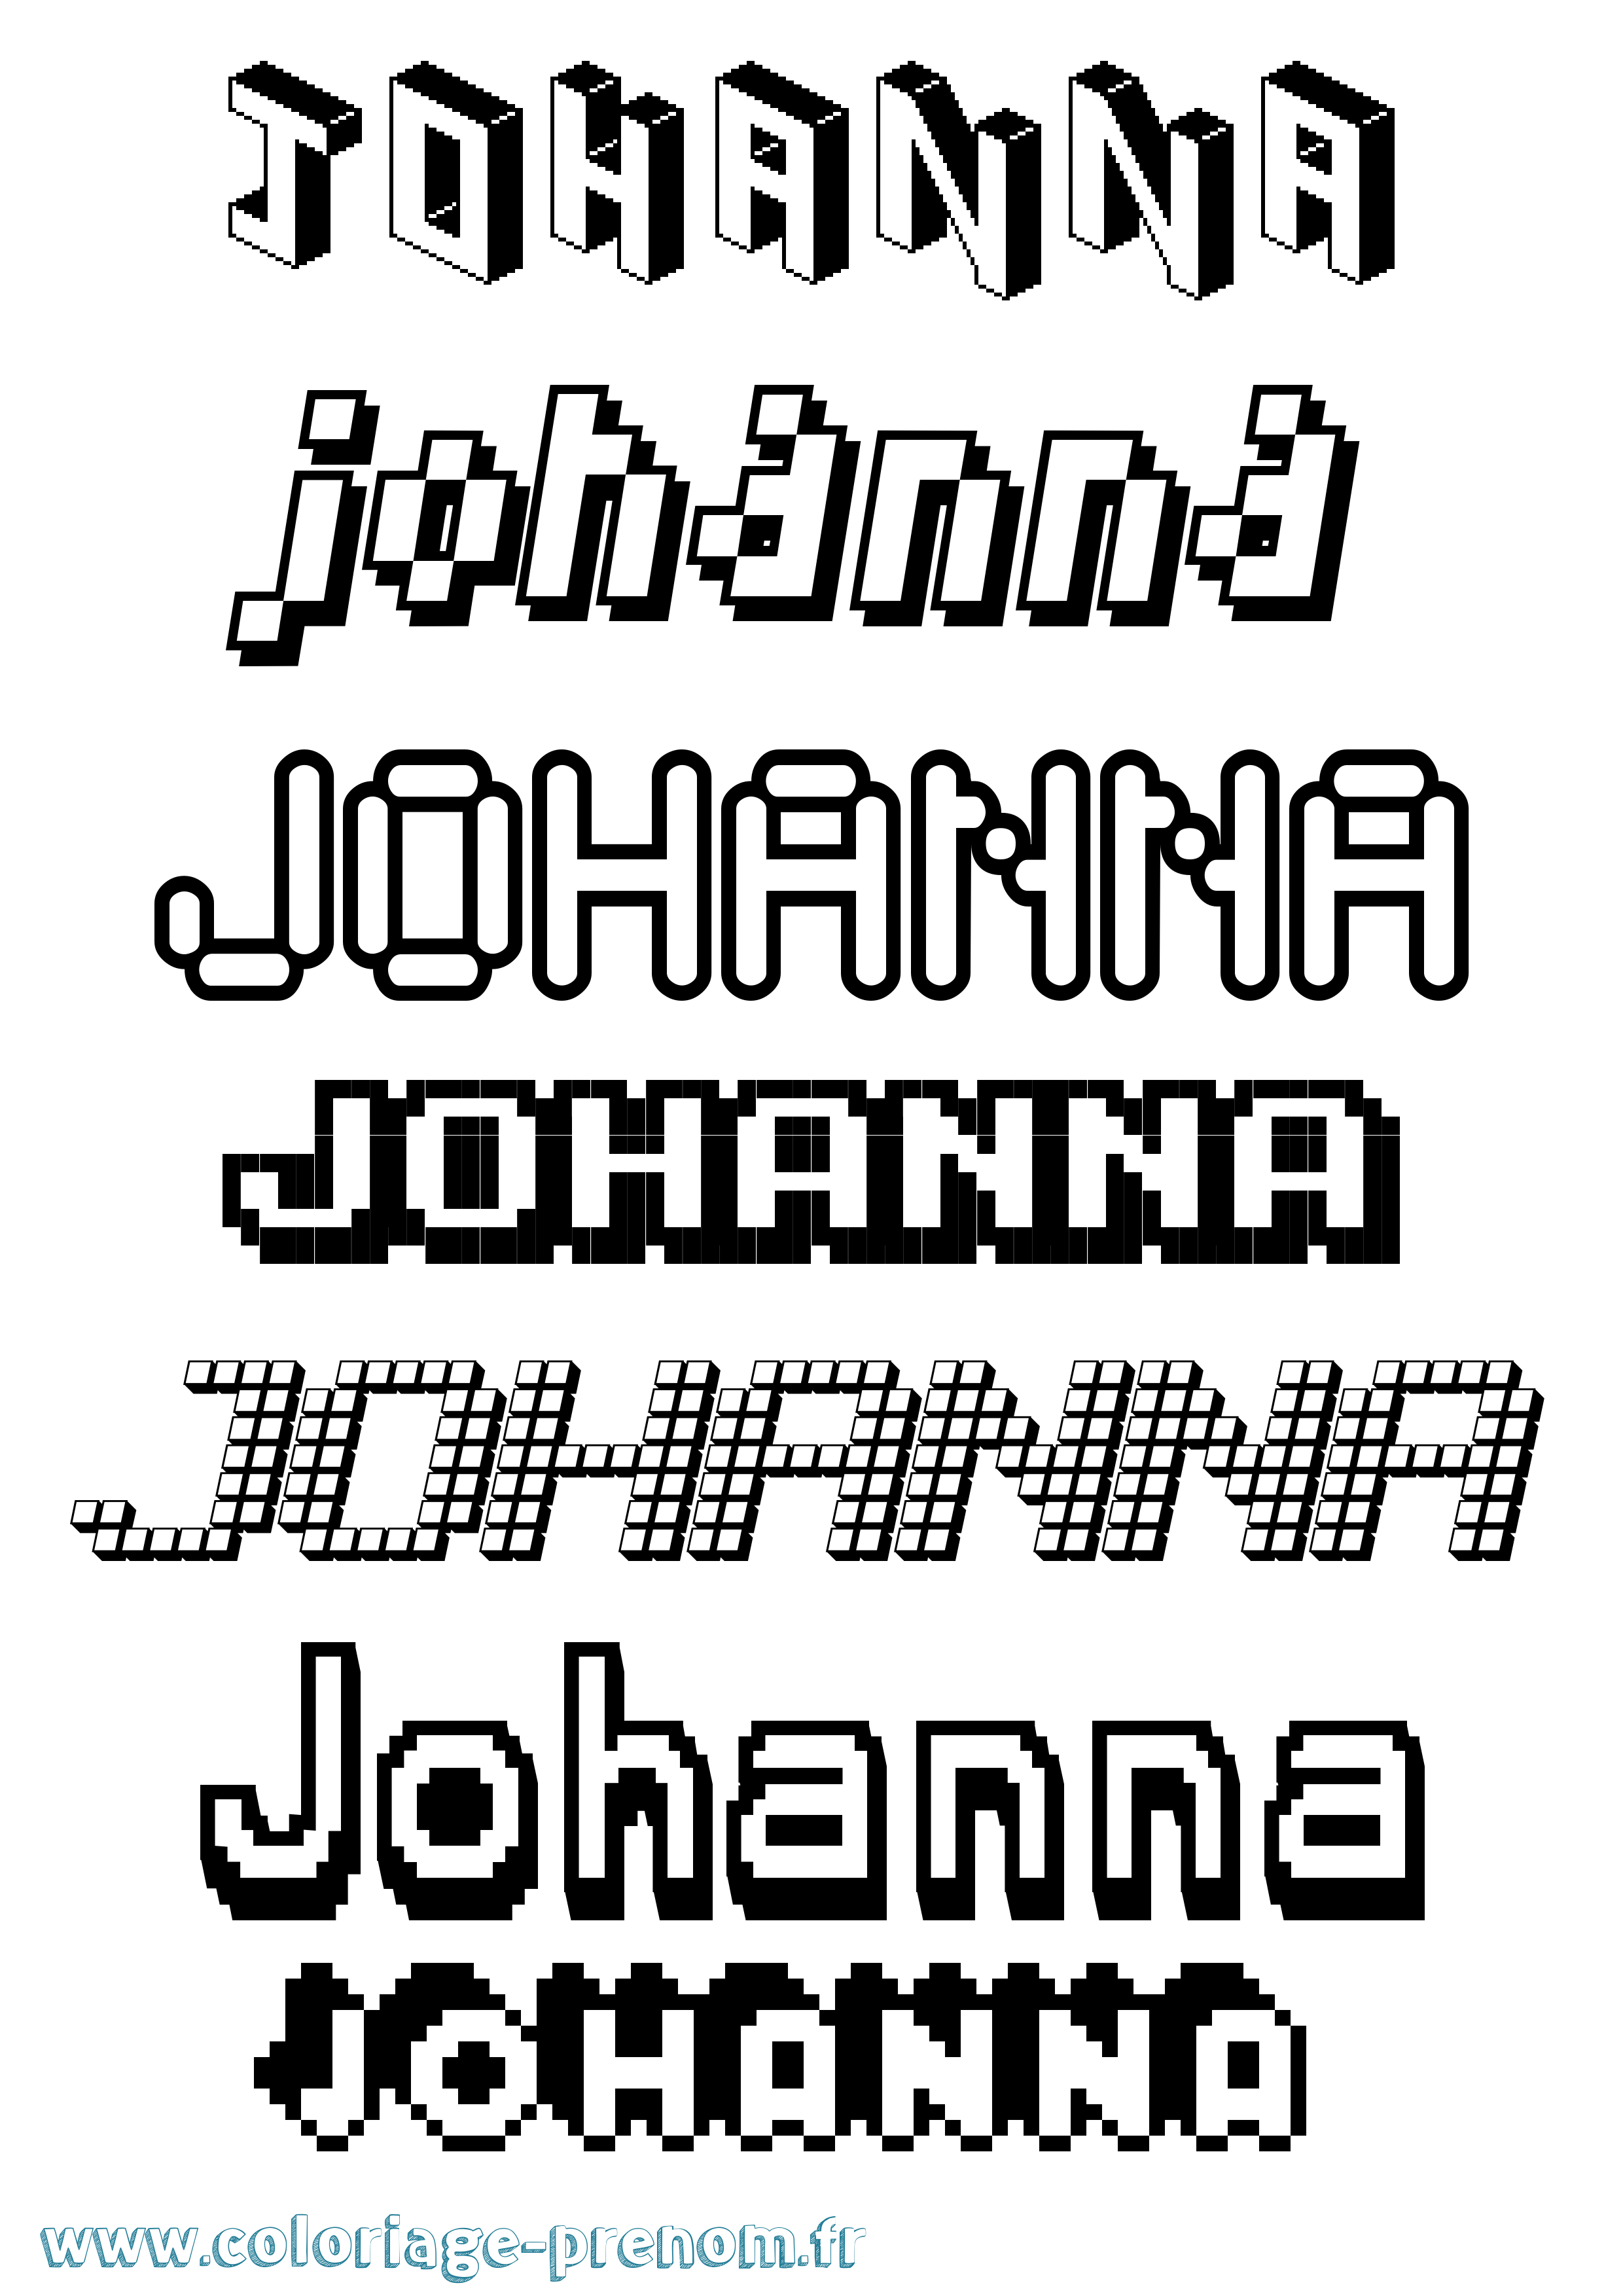 Coloriage prénom Johanna Pixel